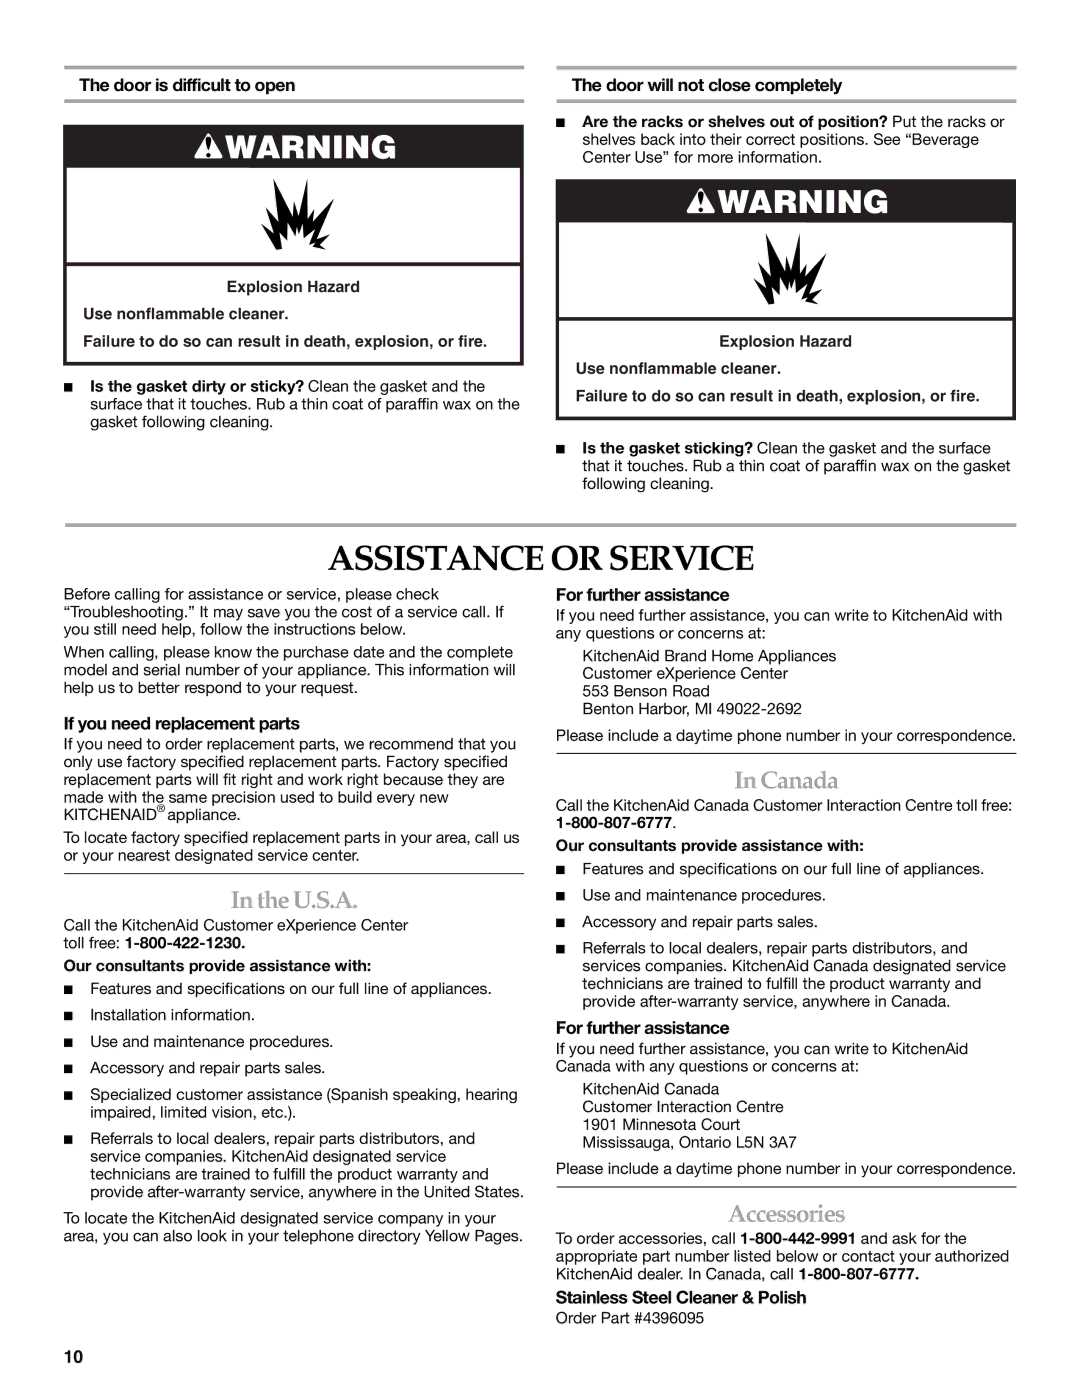 KitchenAid 2300276B manual Assistance or Service, U.S.A, Canada, Accessories 